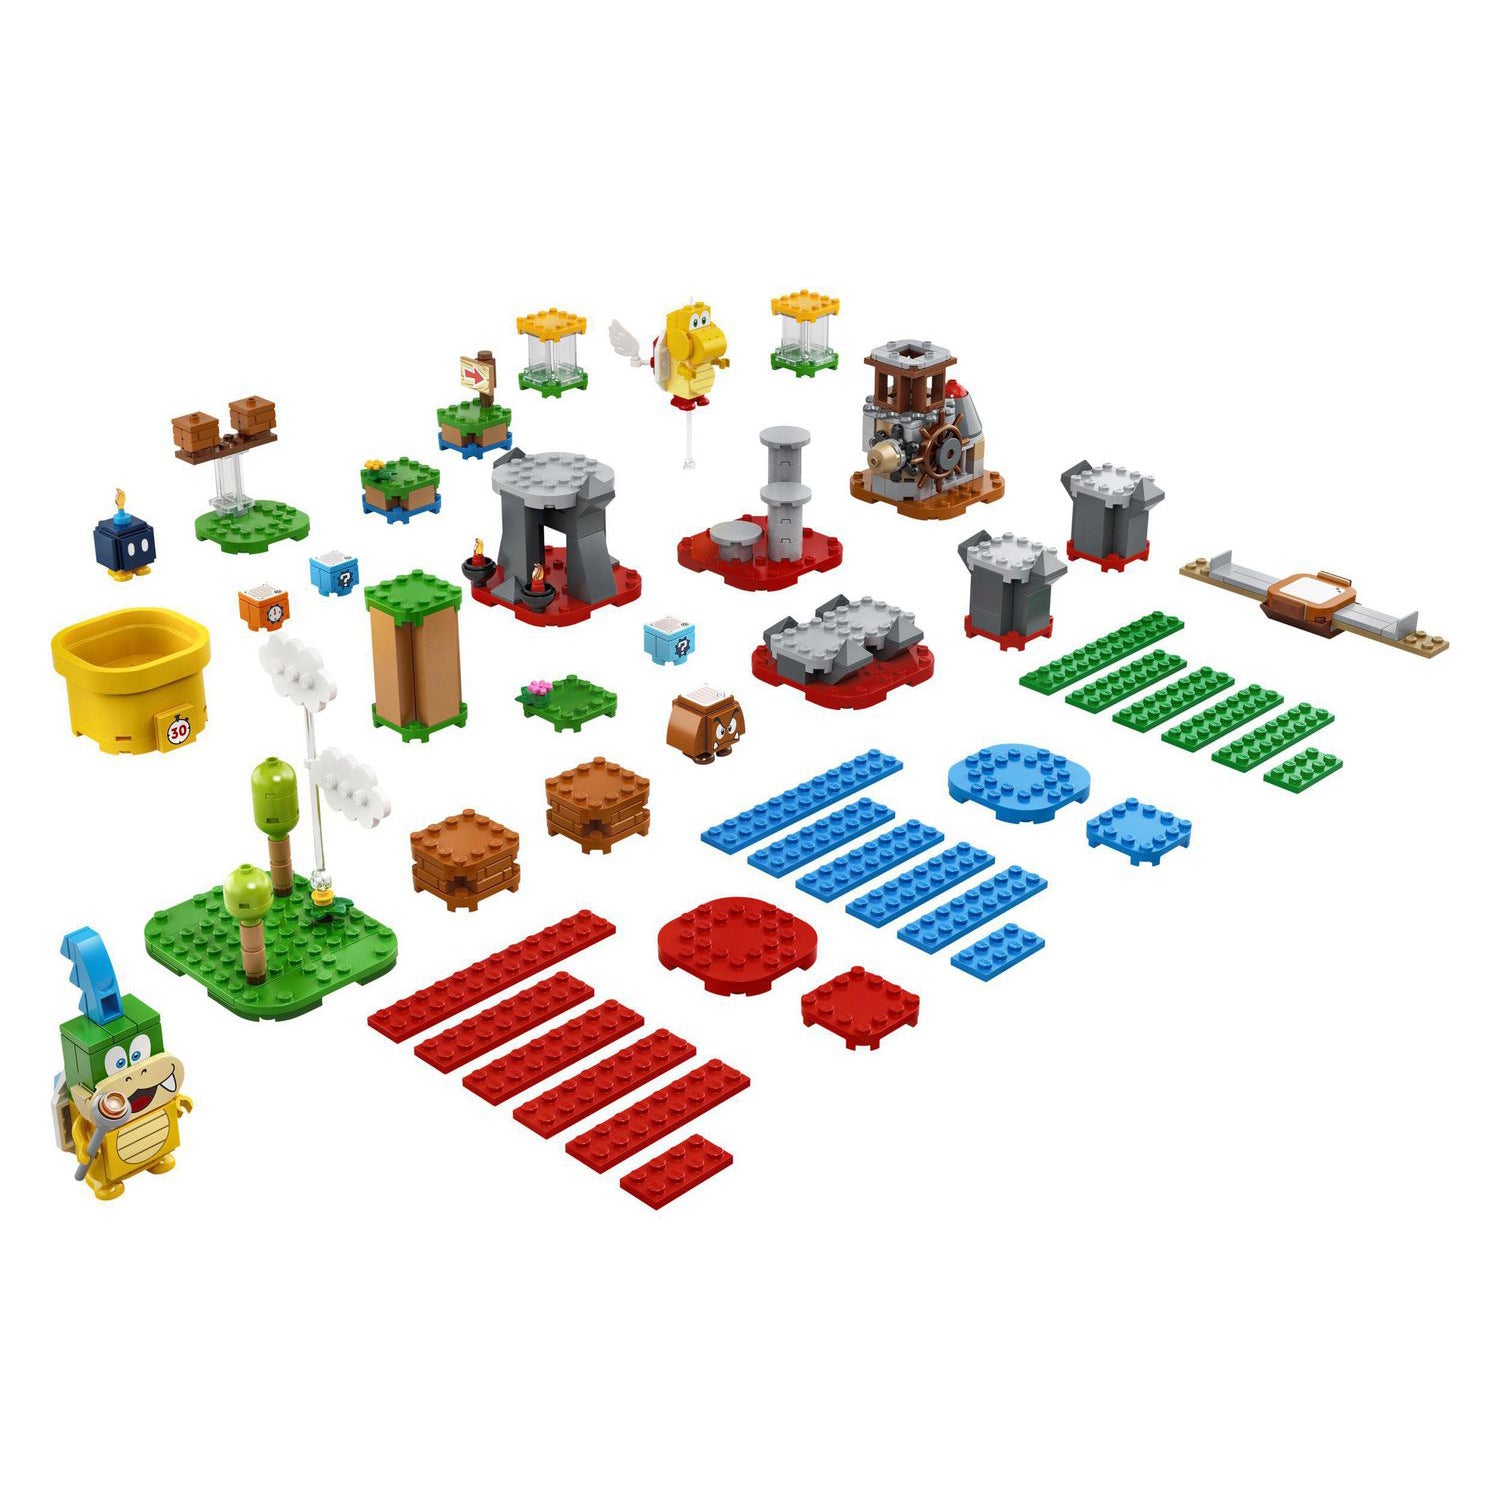 LEGO Super Mario - Master Your Adventure Maker Set [71380 - 366 pcs]